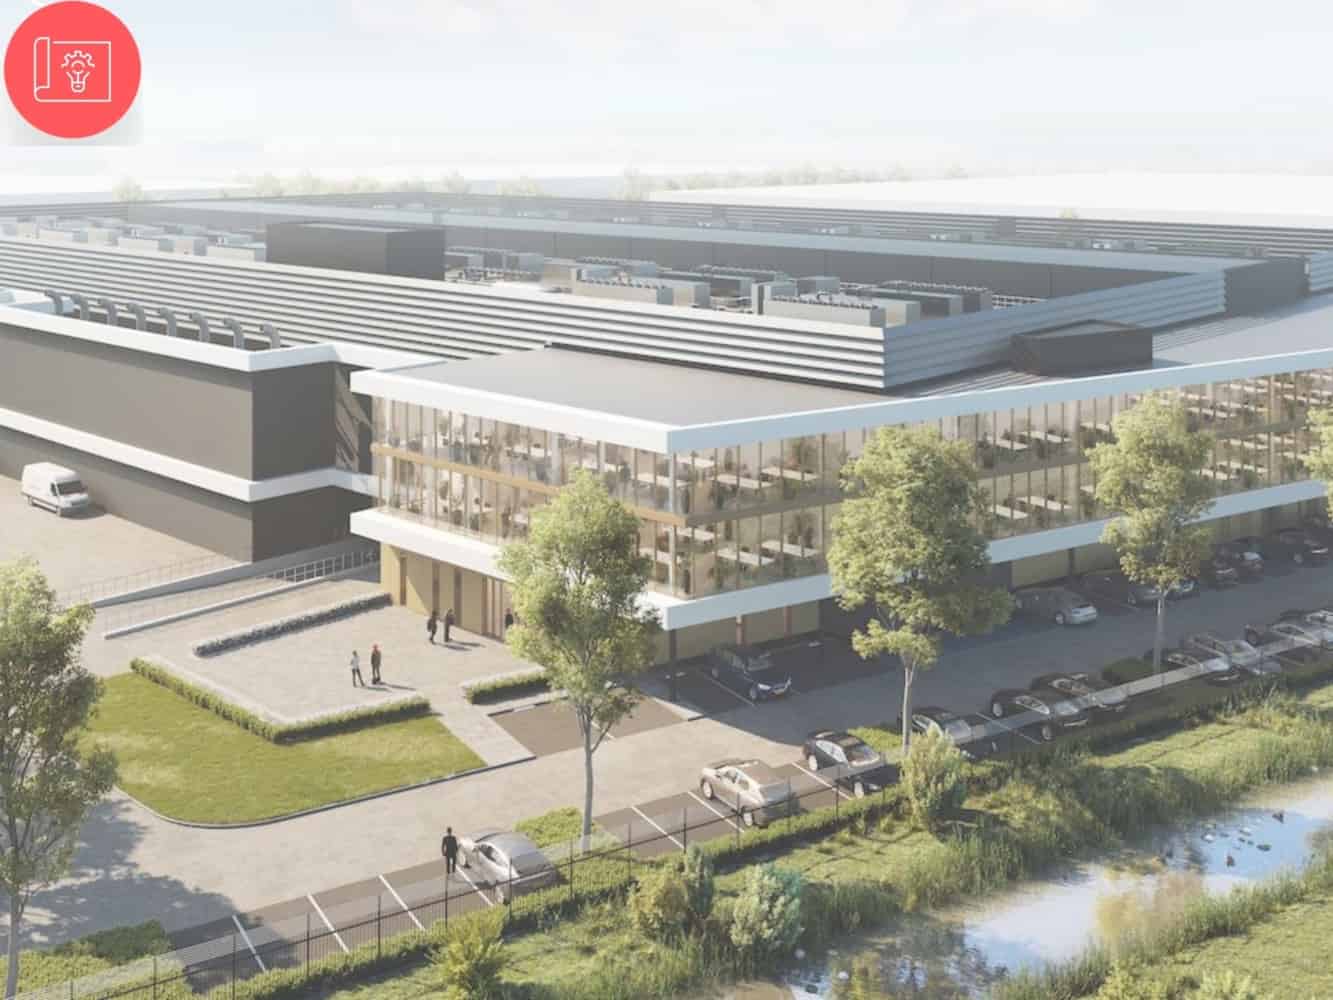 Realization of data center in Aalsmeer